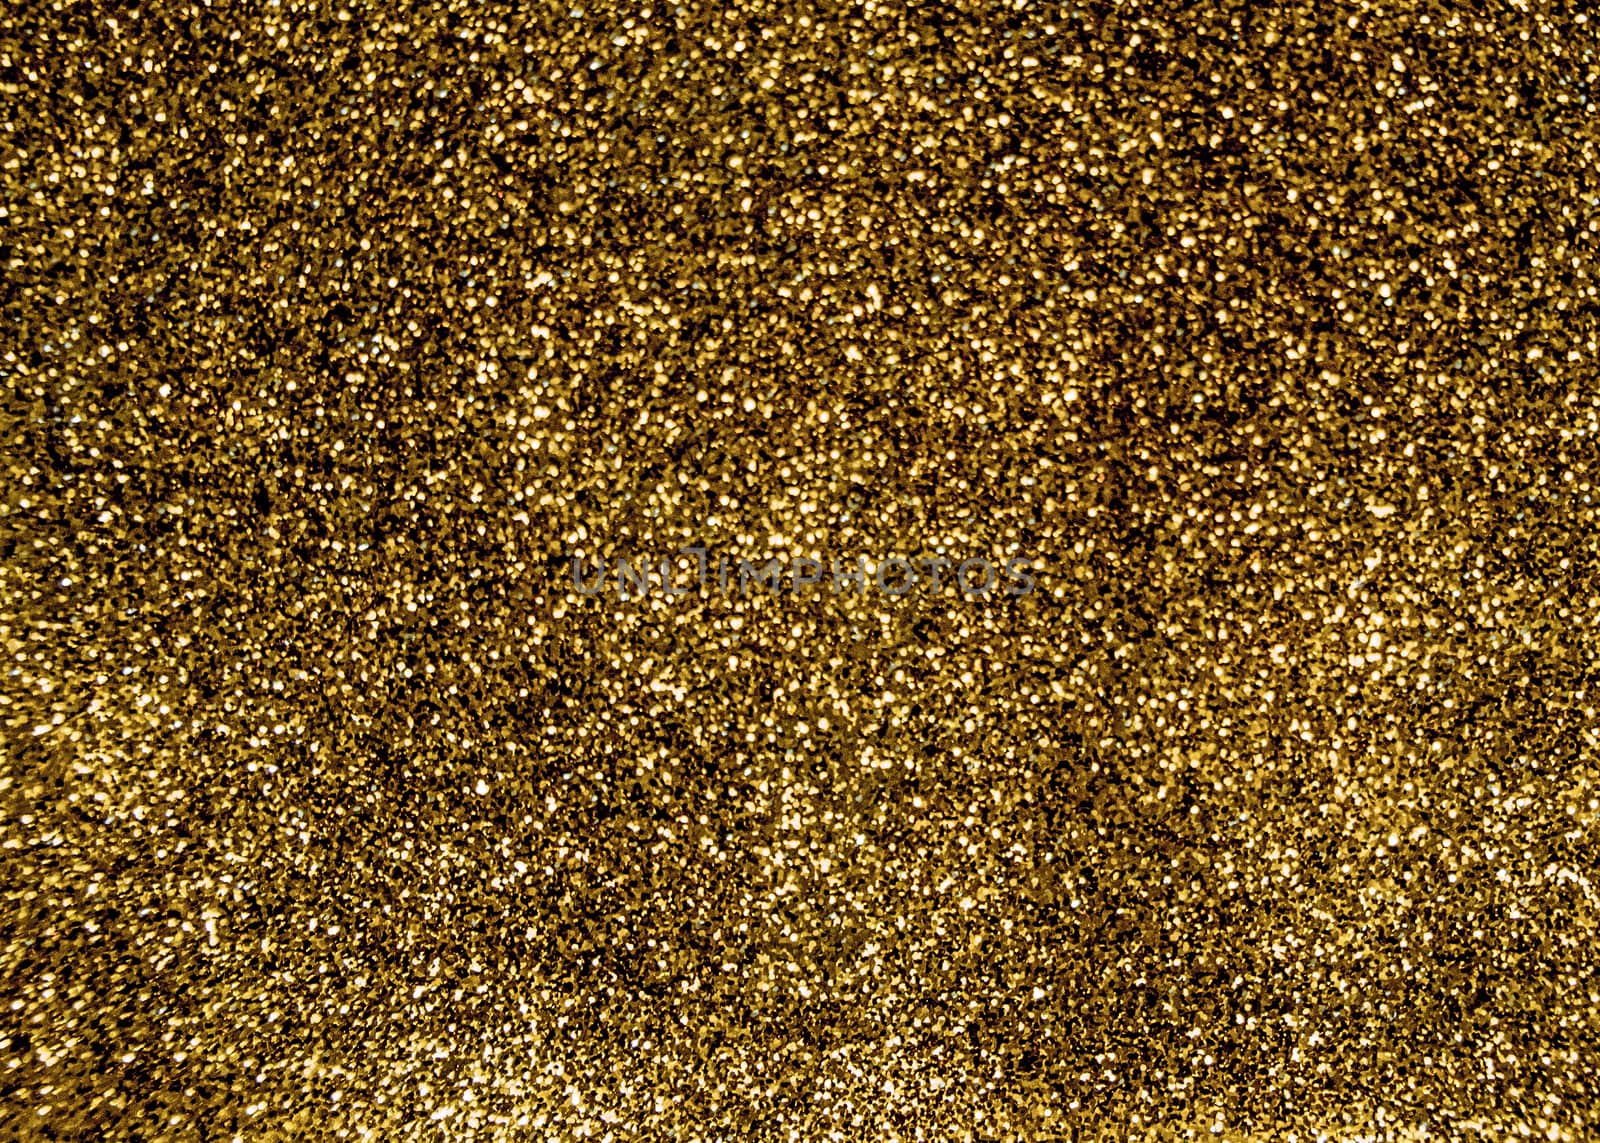 The shiny elegant glitter metallic surface textured background